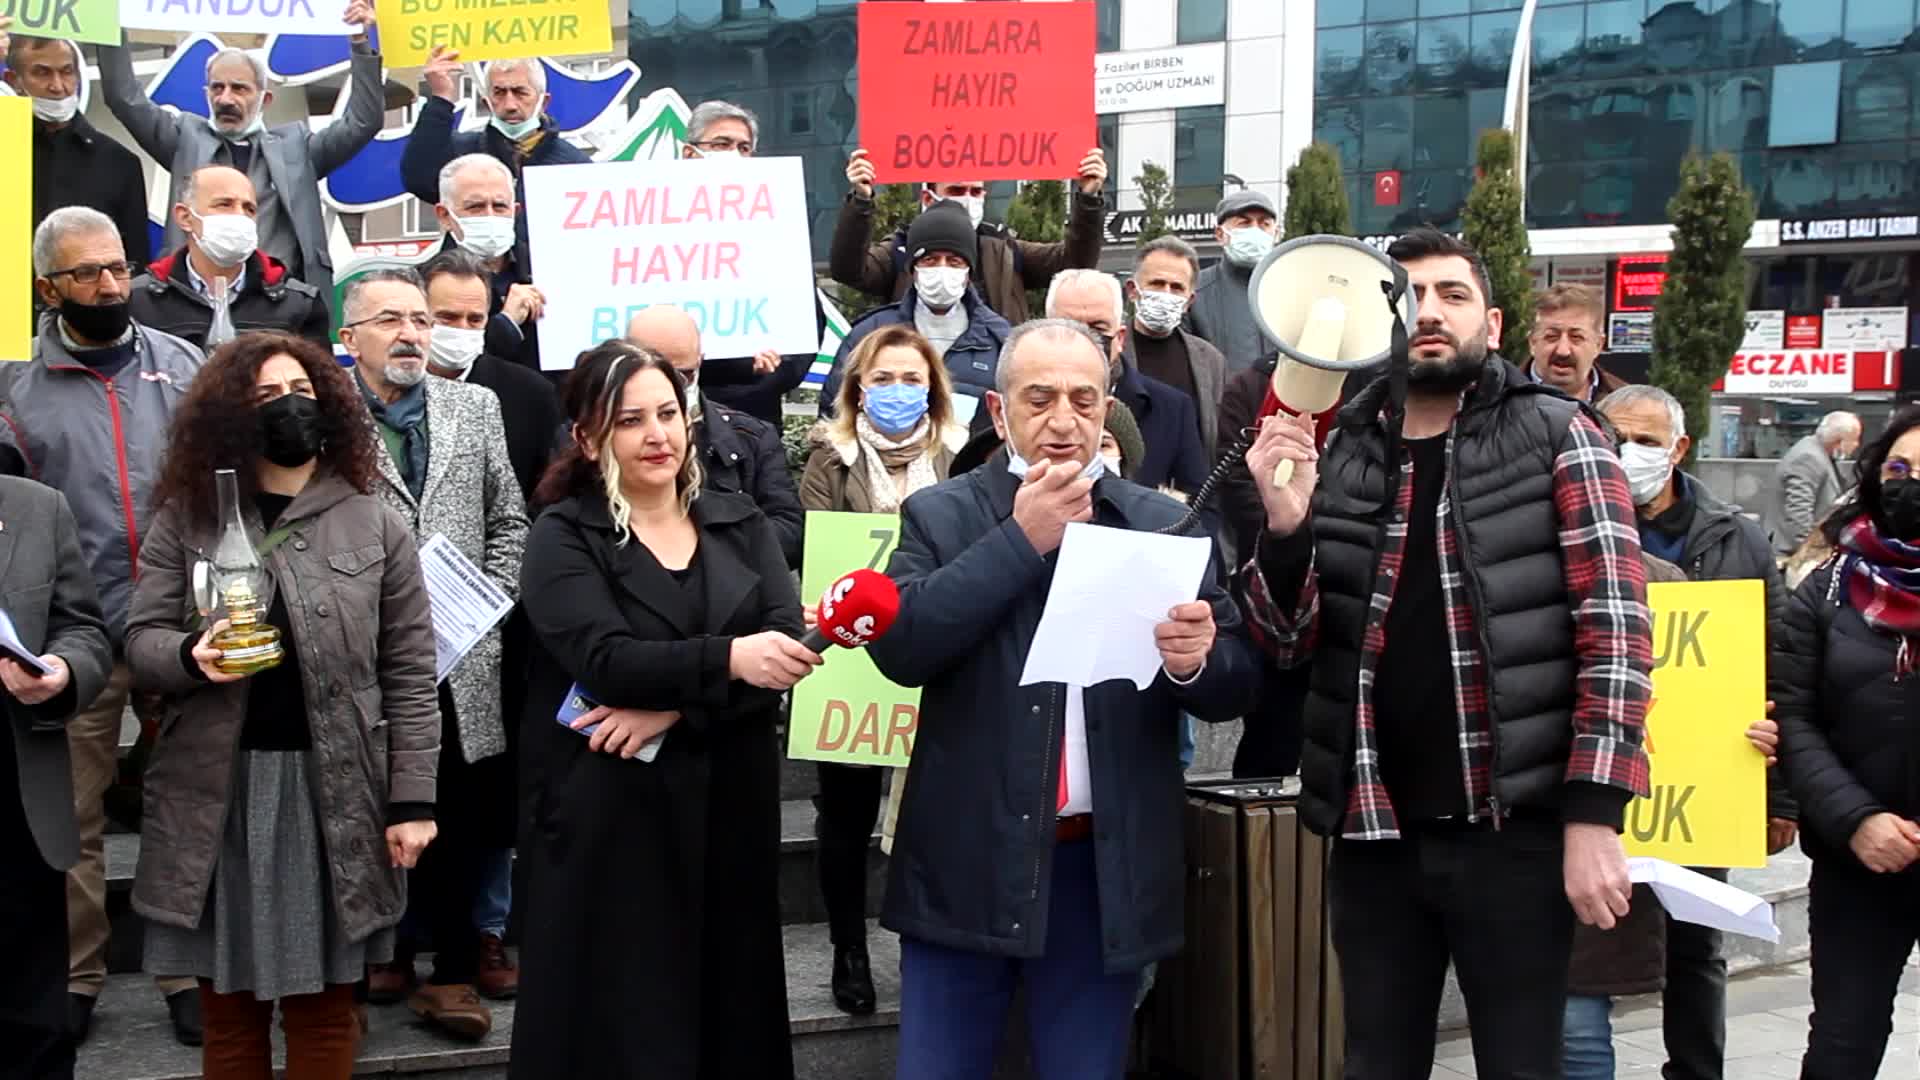 Rize'de zam protestosu: "Bezduk", "Darlanduk", "Yanduk"